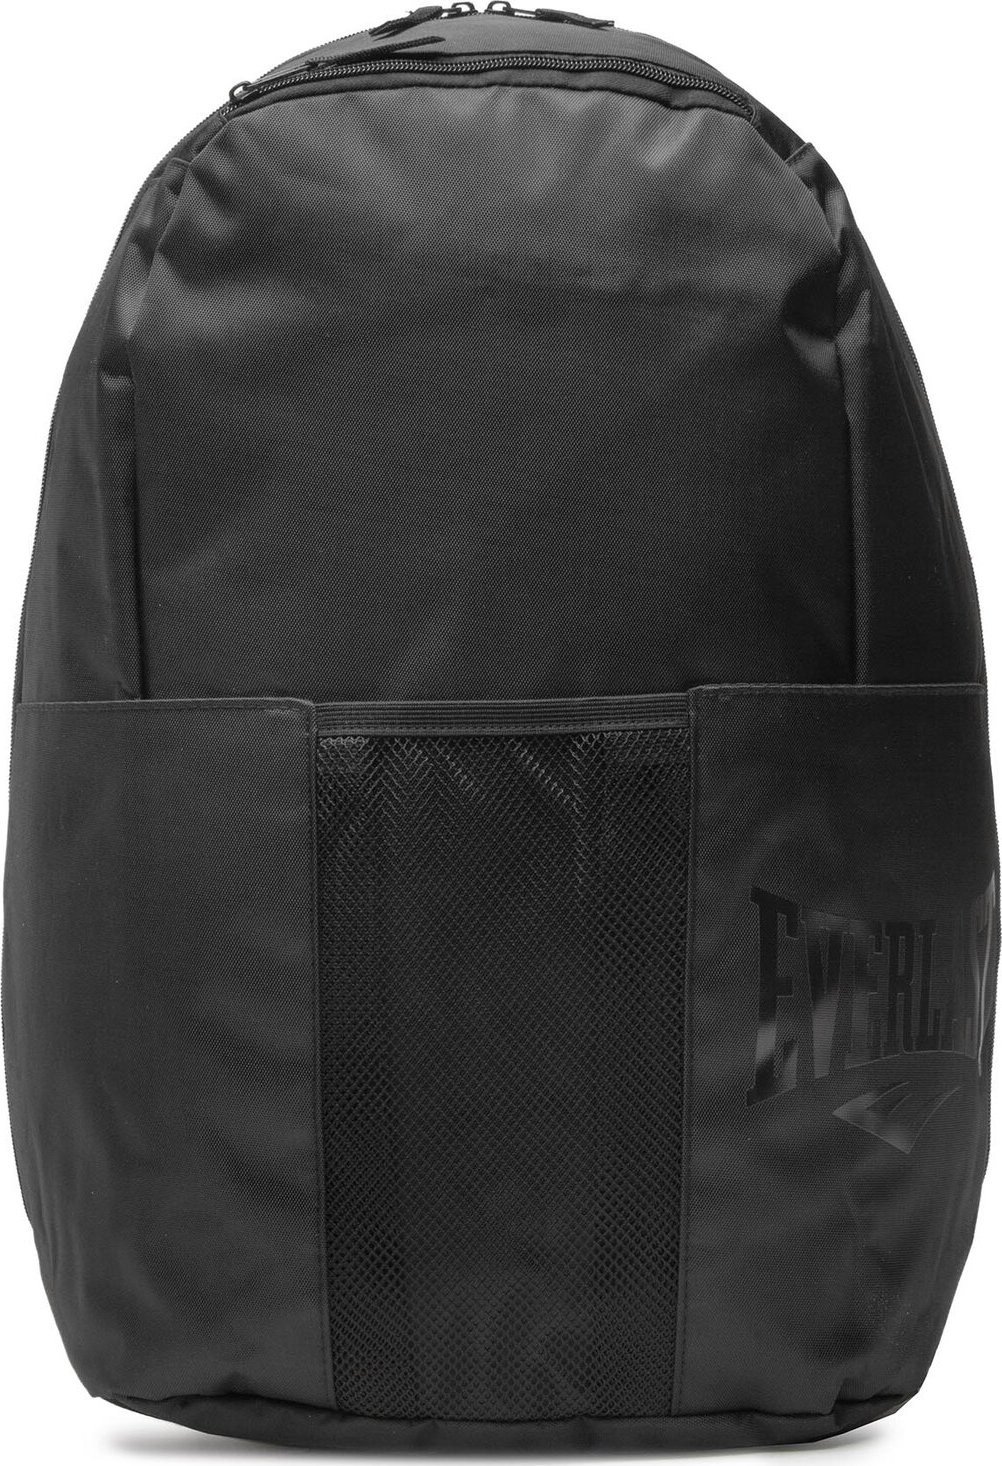 Batoh Everlast Techni Backpack 899350-70 Black 8